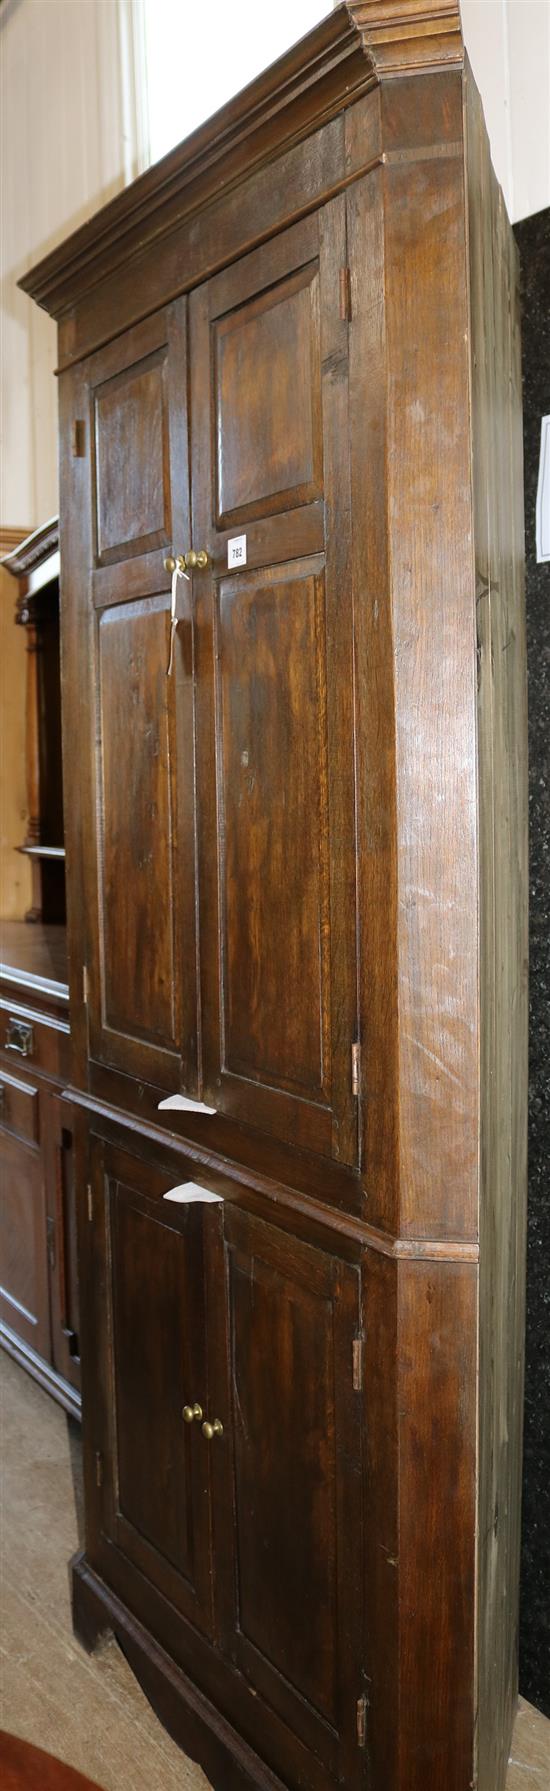 Late 18th century oak standing corner cupboard(-)